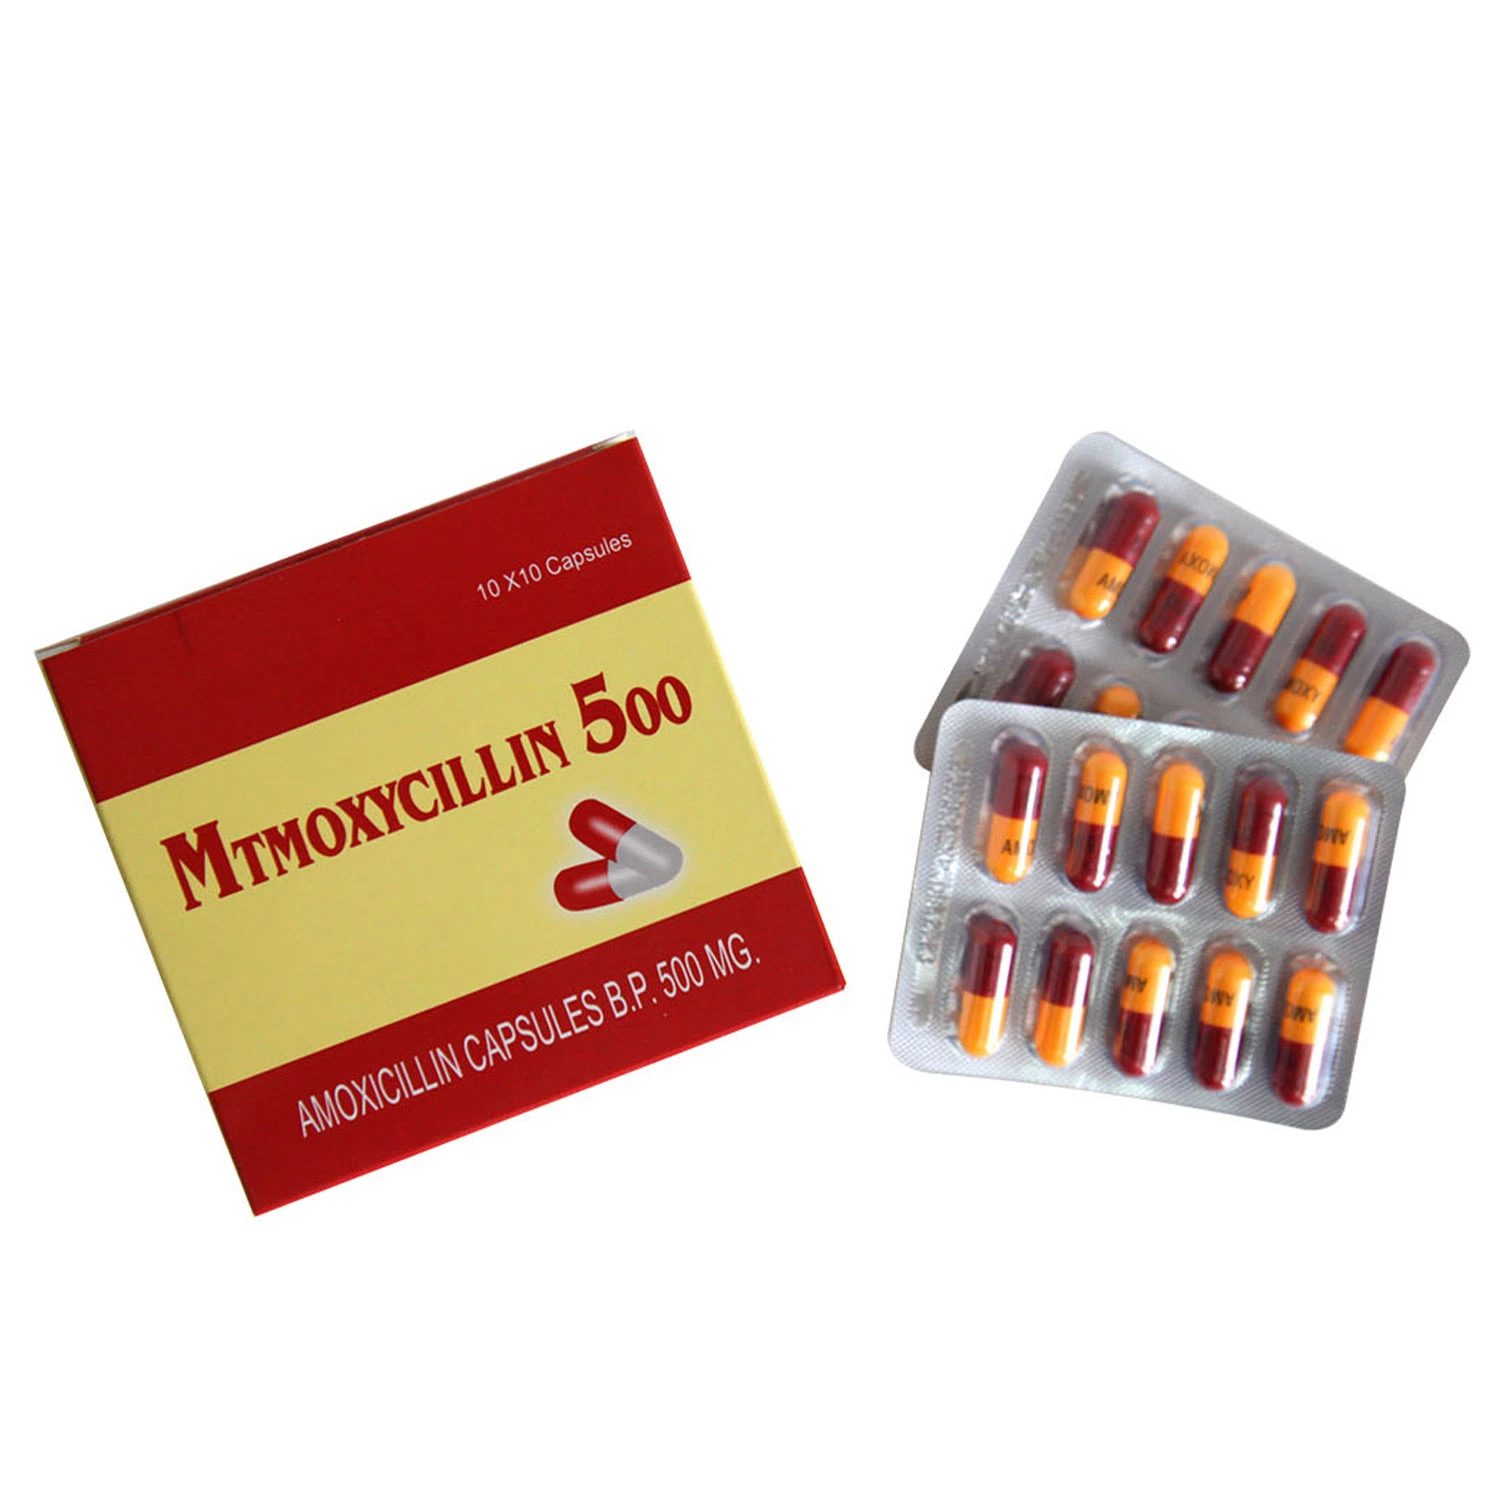 Amoxicillin Capsule 500mg Fertigarzneimittel Western Medicines Pharmaceuticals Drugs